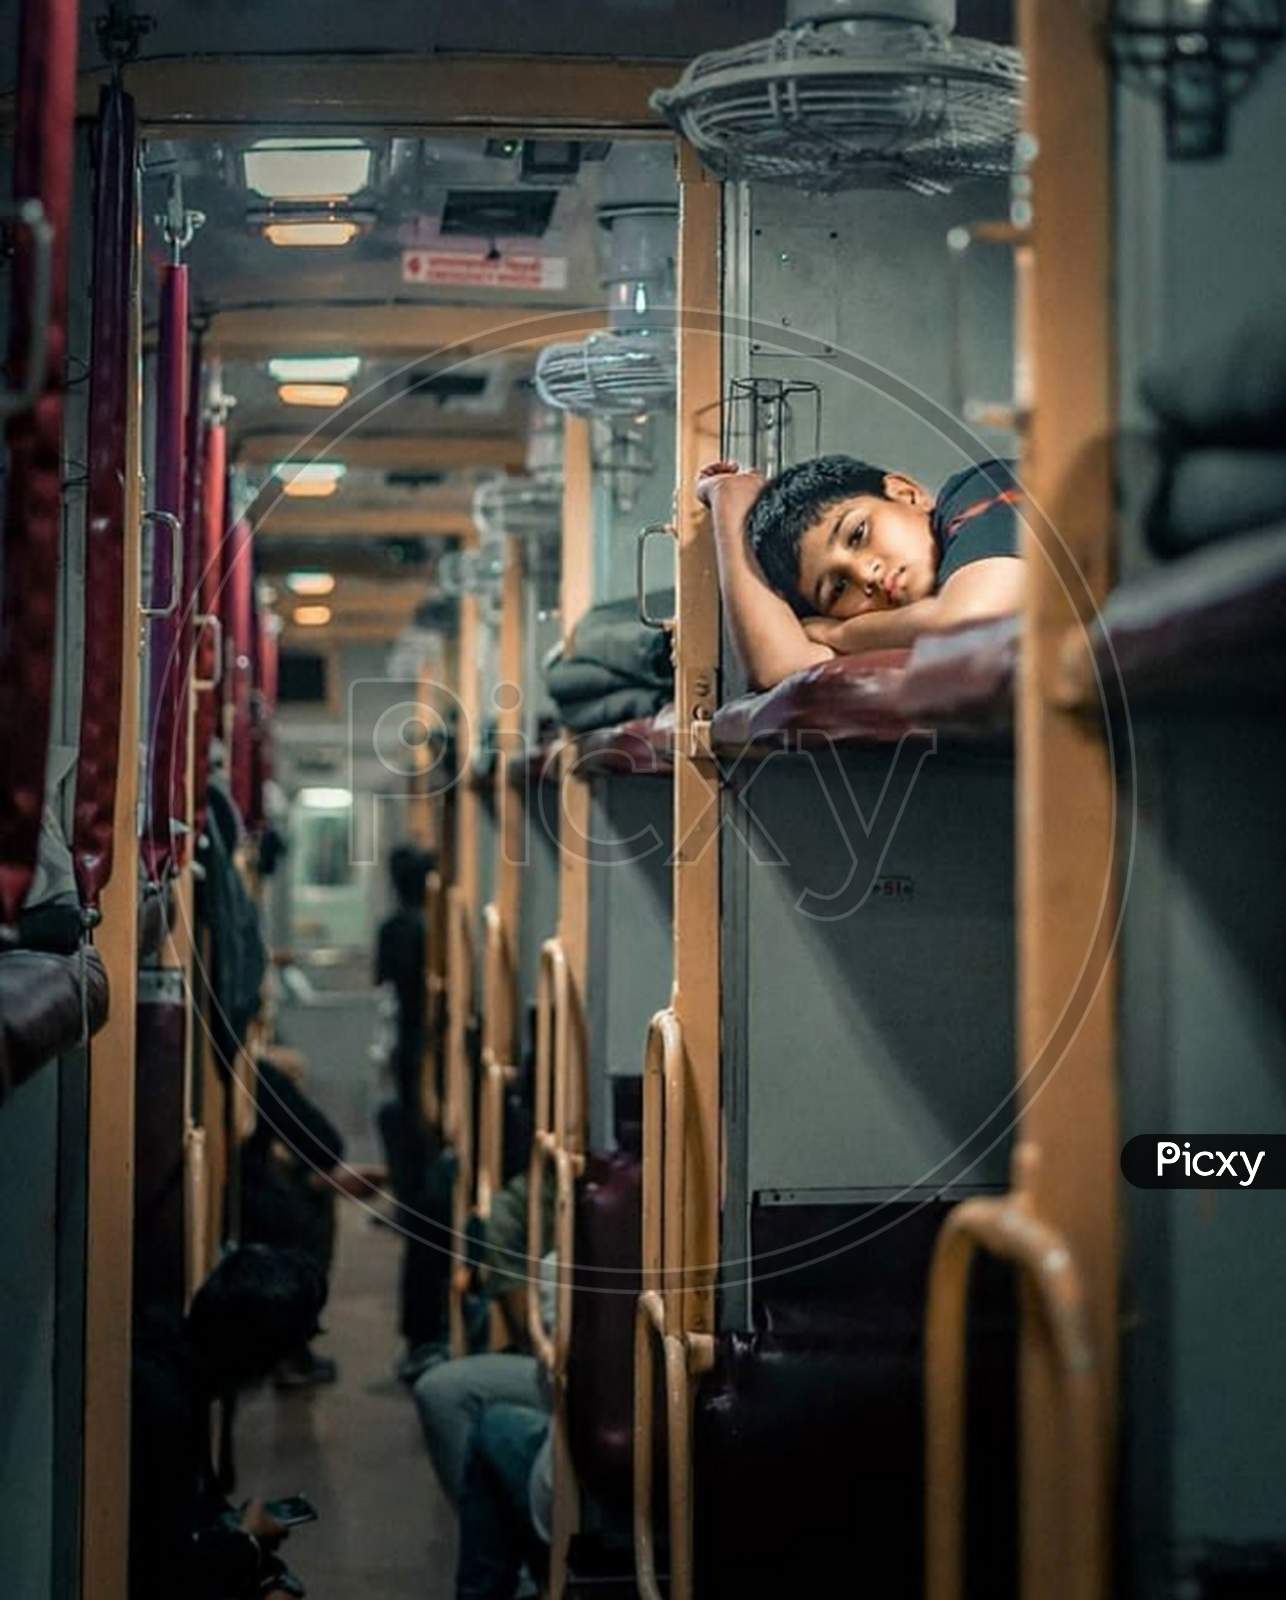 Inside Indian  express train